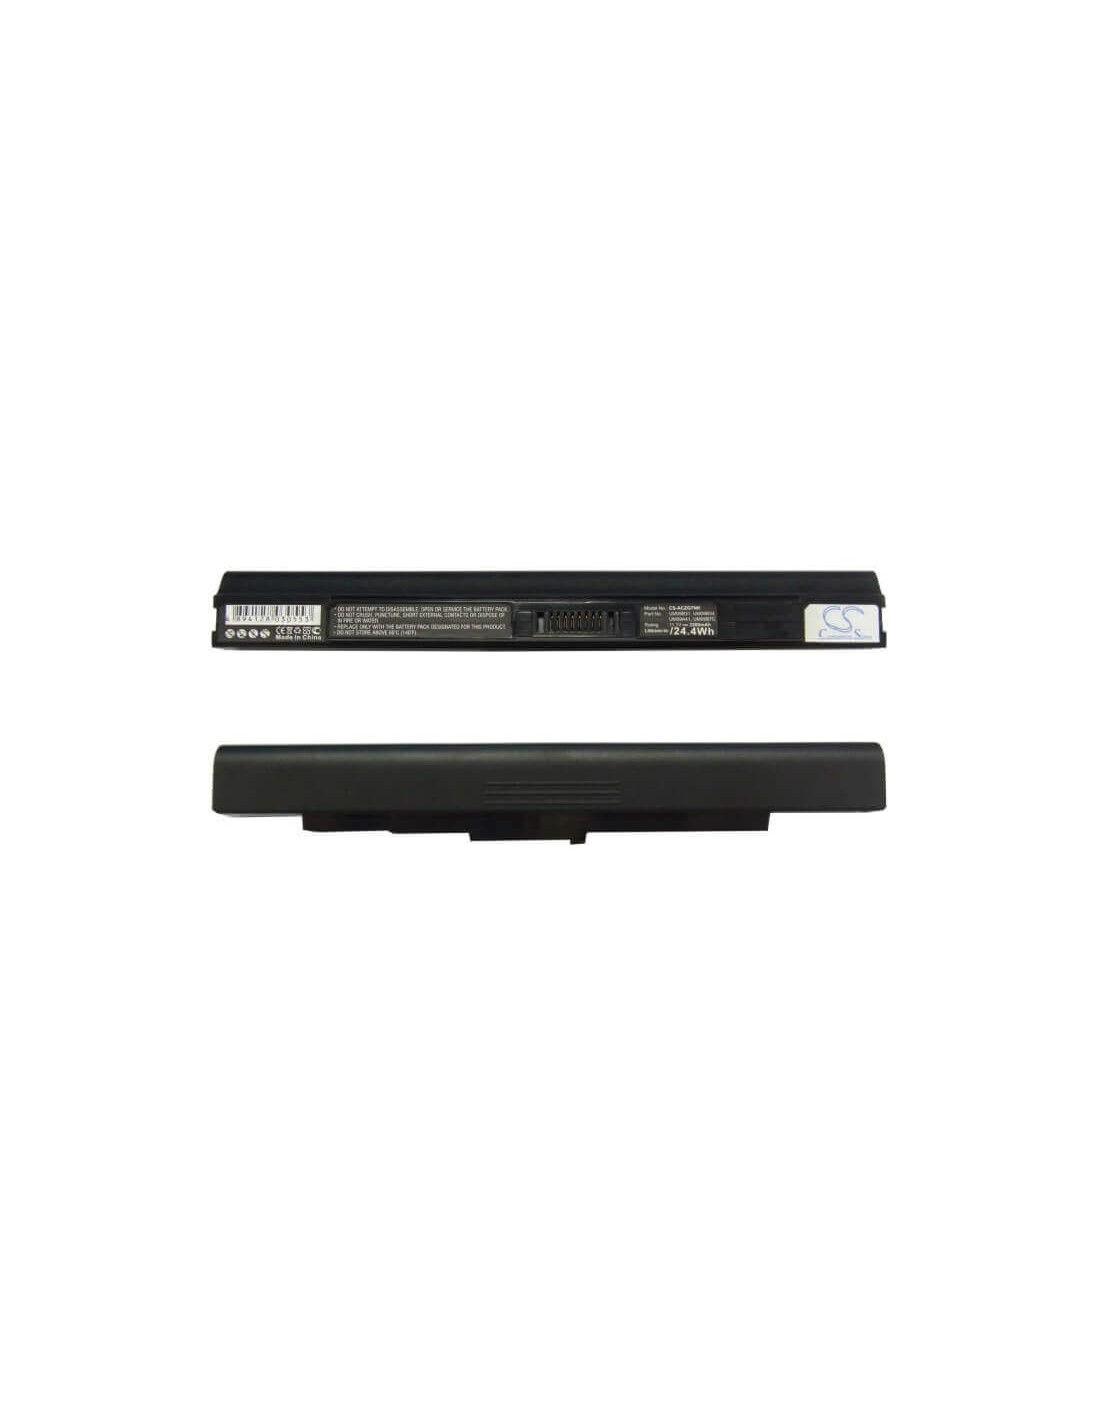 Black Battery for Acer Aspire One 531, Aspire One 751, Aspire One 751-bk23 11.1V, 2200mAh - 24.42Wh